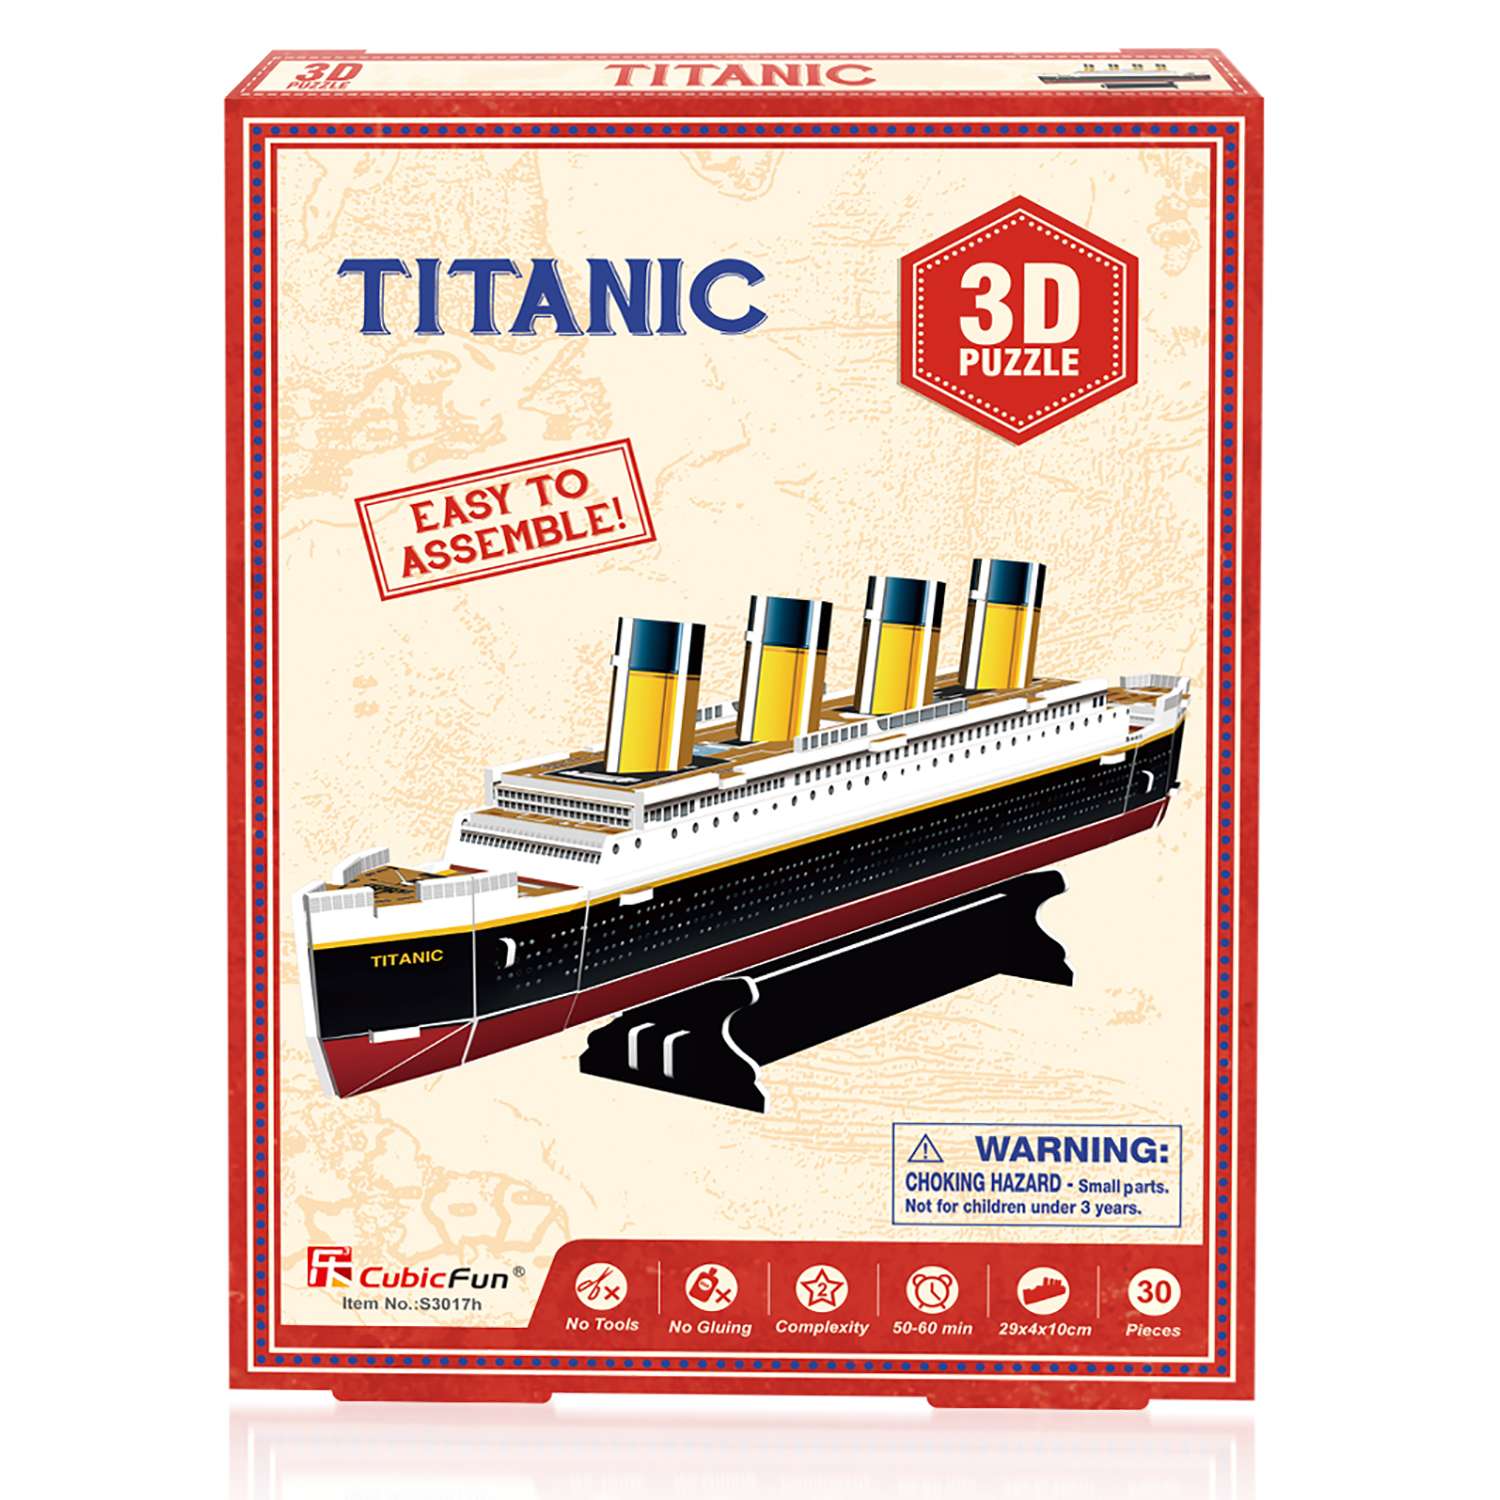 Пазл CubicFun Титаник 3D 30деталей S3017h - фото 1